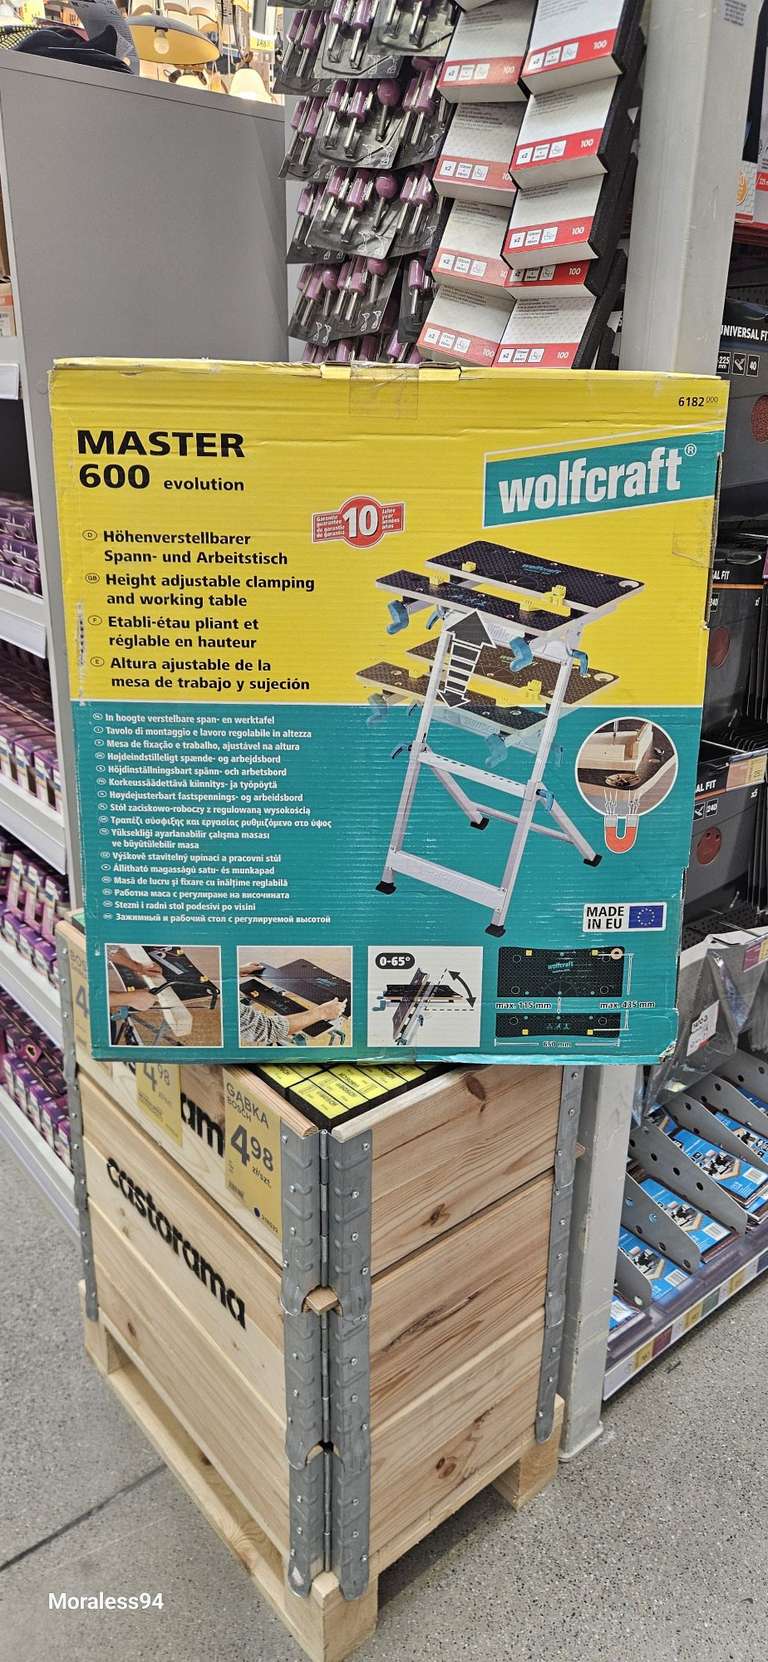 Wolfcraft Master 600 stolik warsztatowy